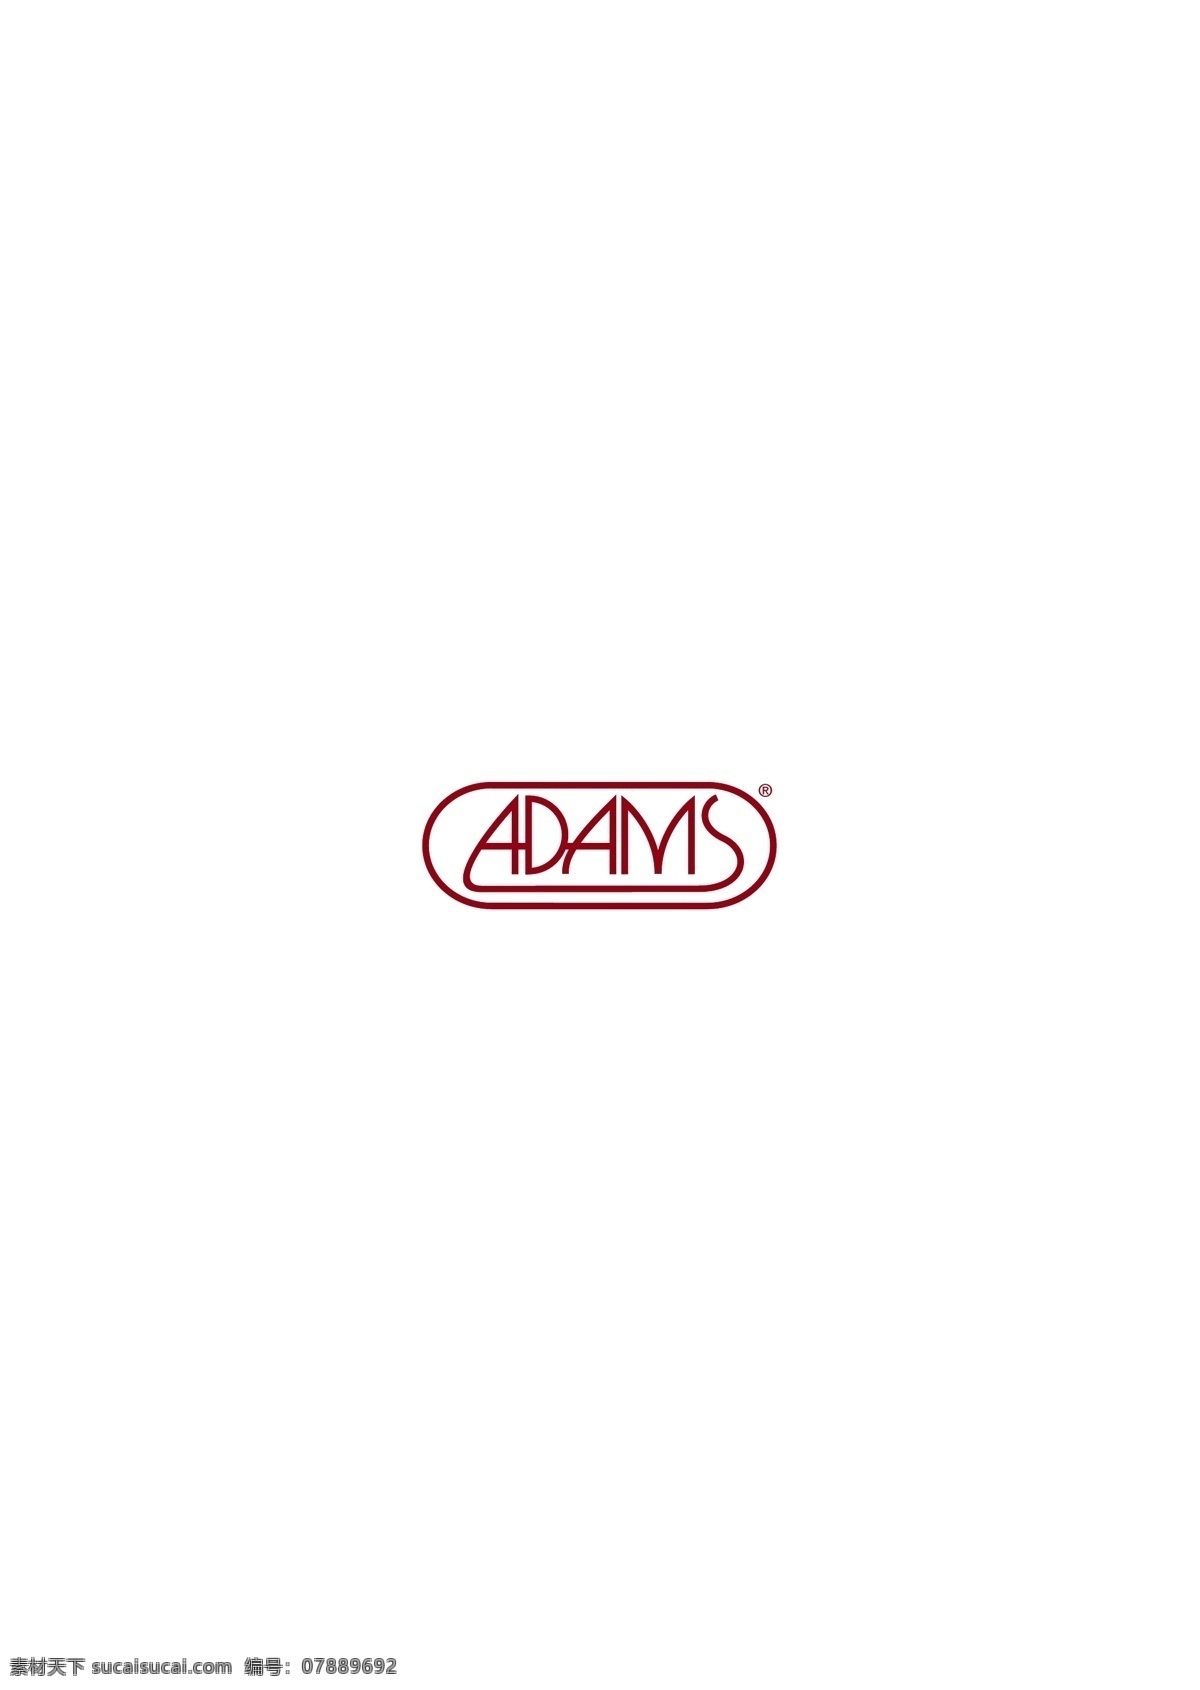 logo大全 logo 设计欣赏 商业矢量 矢量下载 adamsmusicalinstruments 唱片公司 标志 标志设计 欣赏 网页矢量 矢量图 其他矢量图